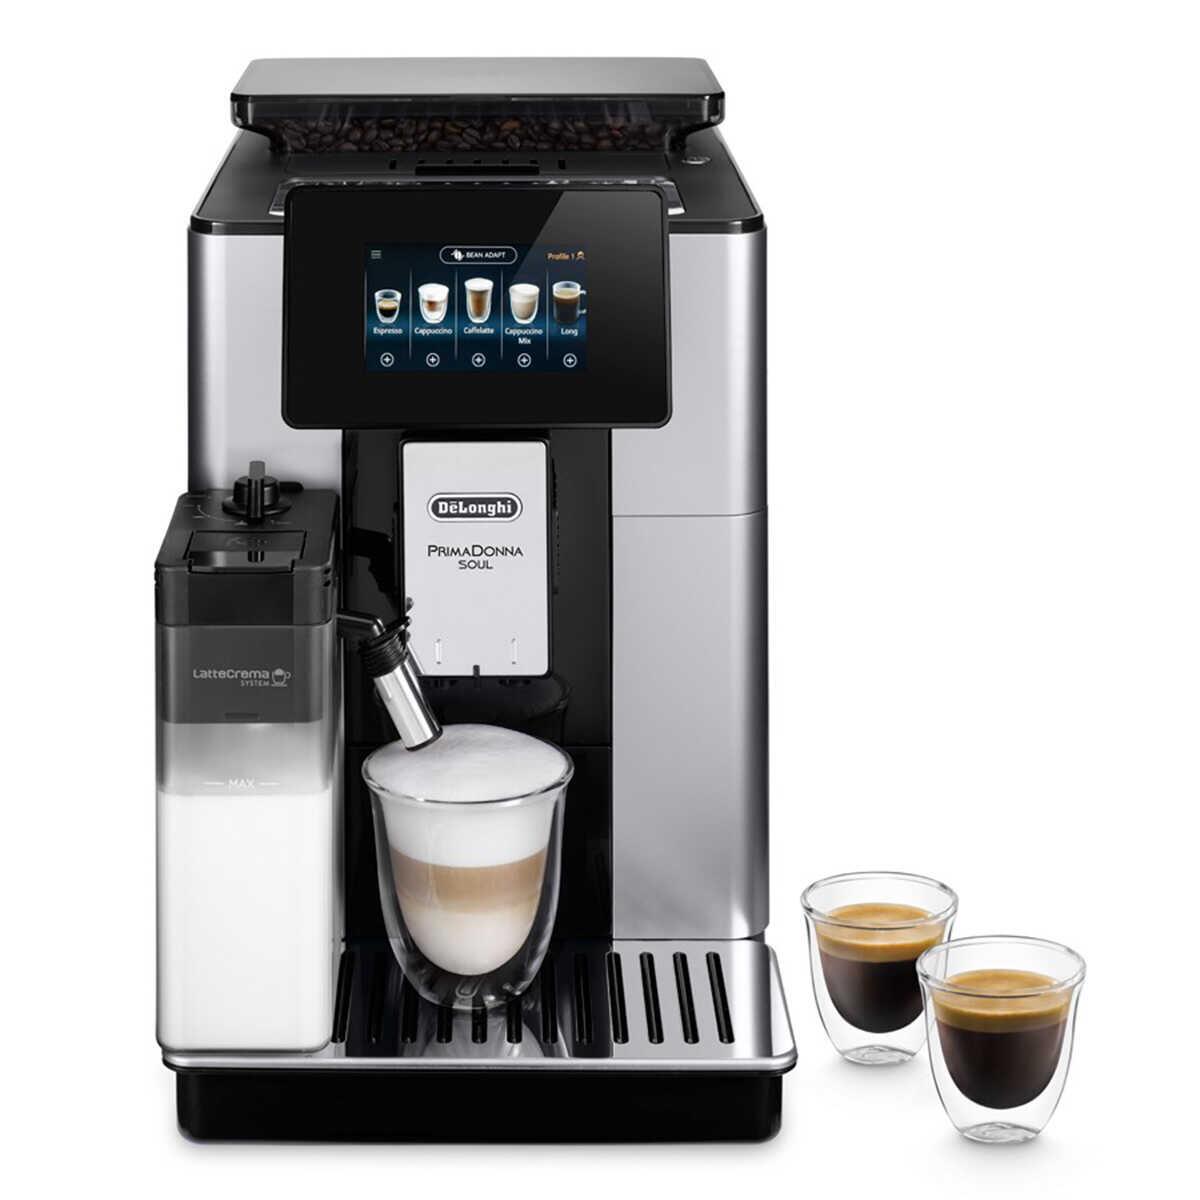 Delonghi Primadonna Soul Fully Automatic Coffee Machine  1